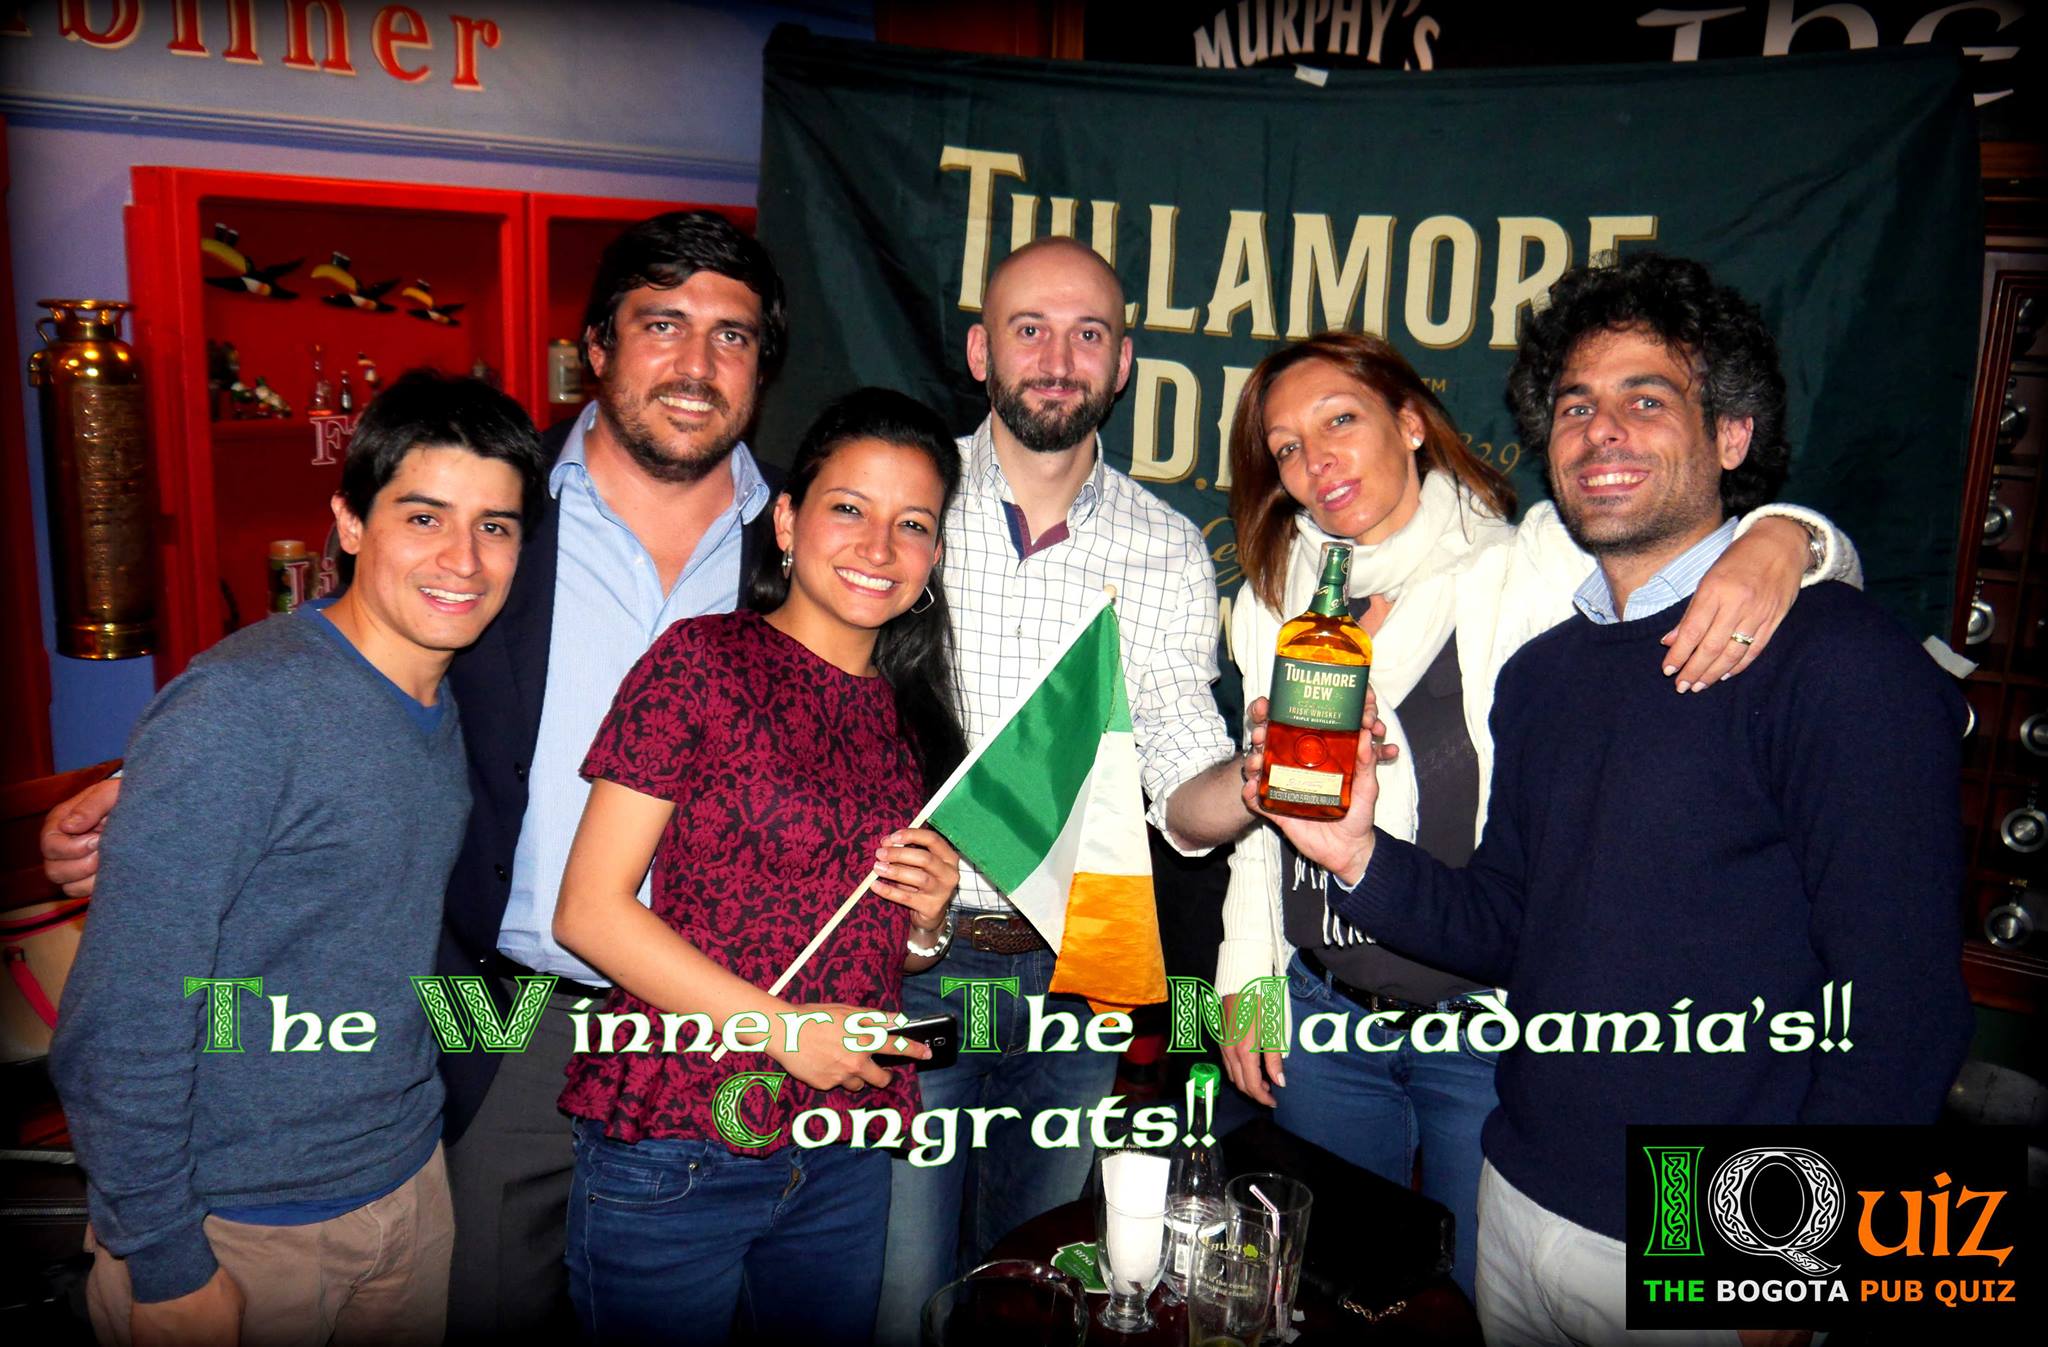 The inaugural winners of IQuiz "The Bogotá Pub Quiz".